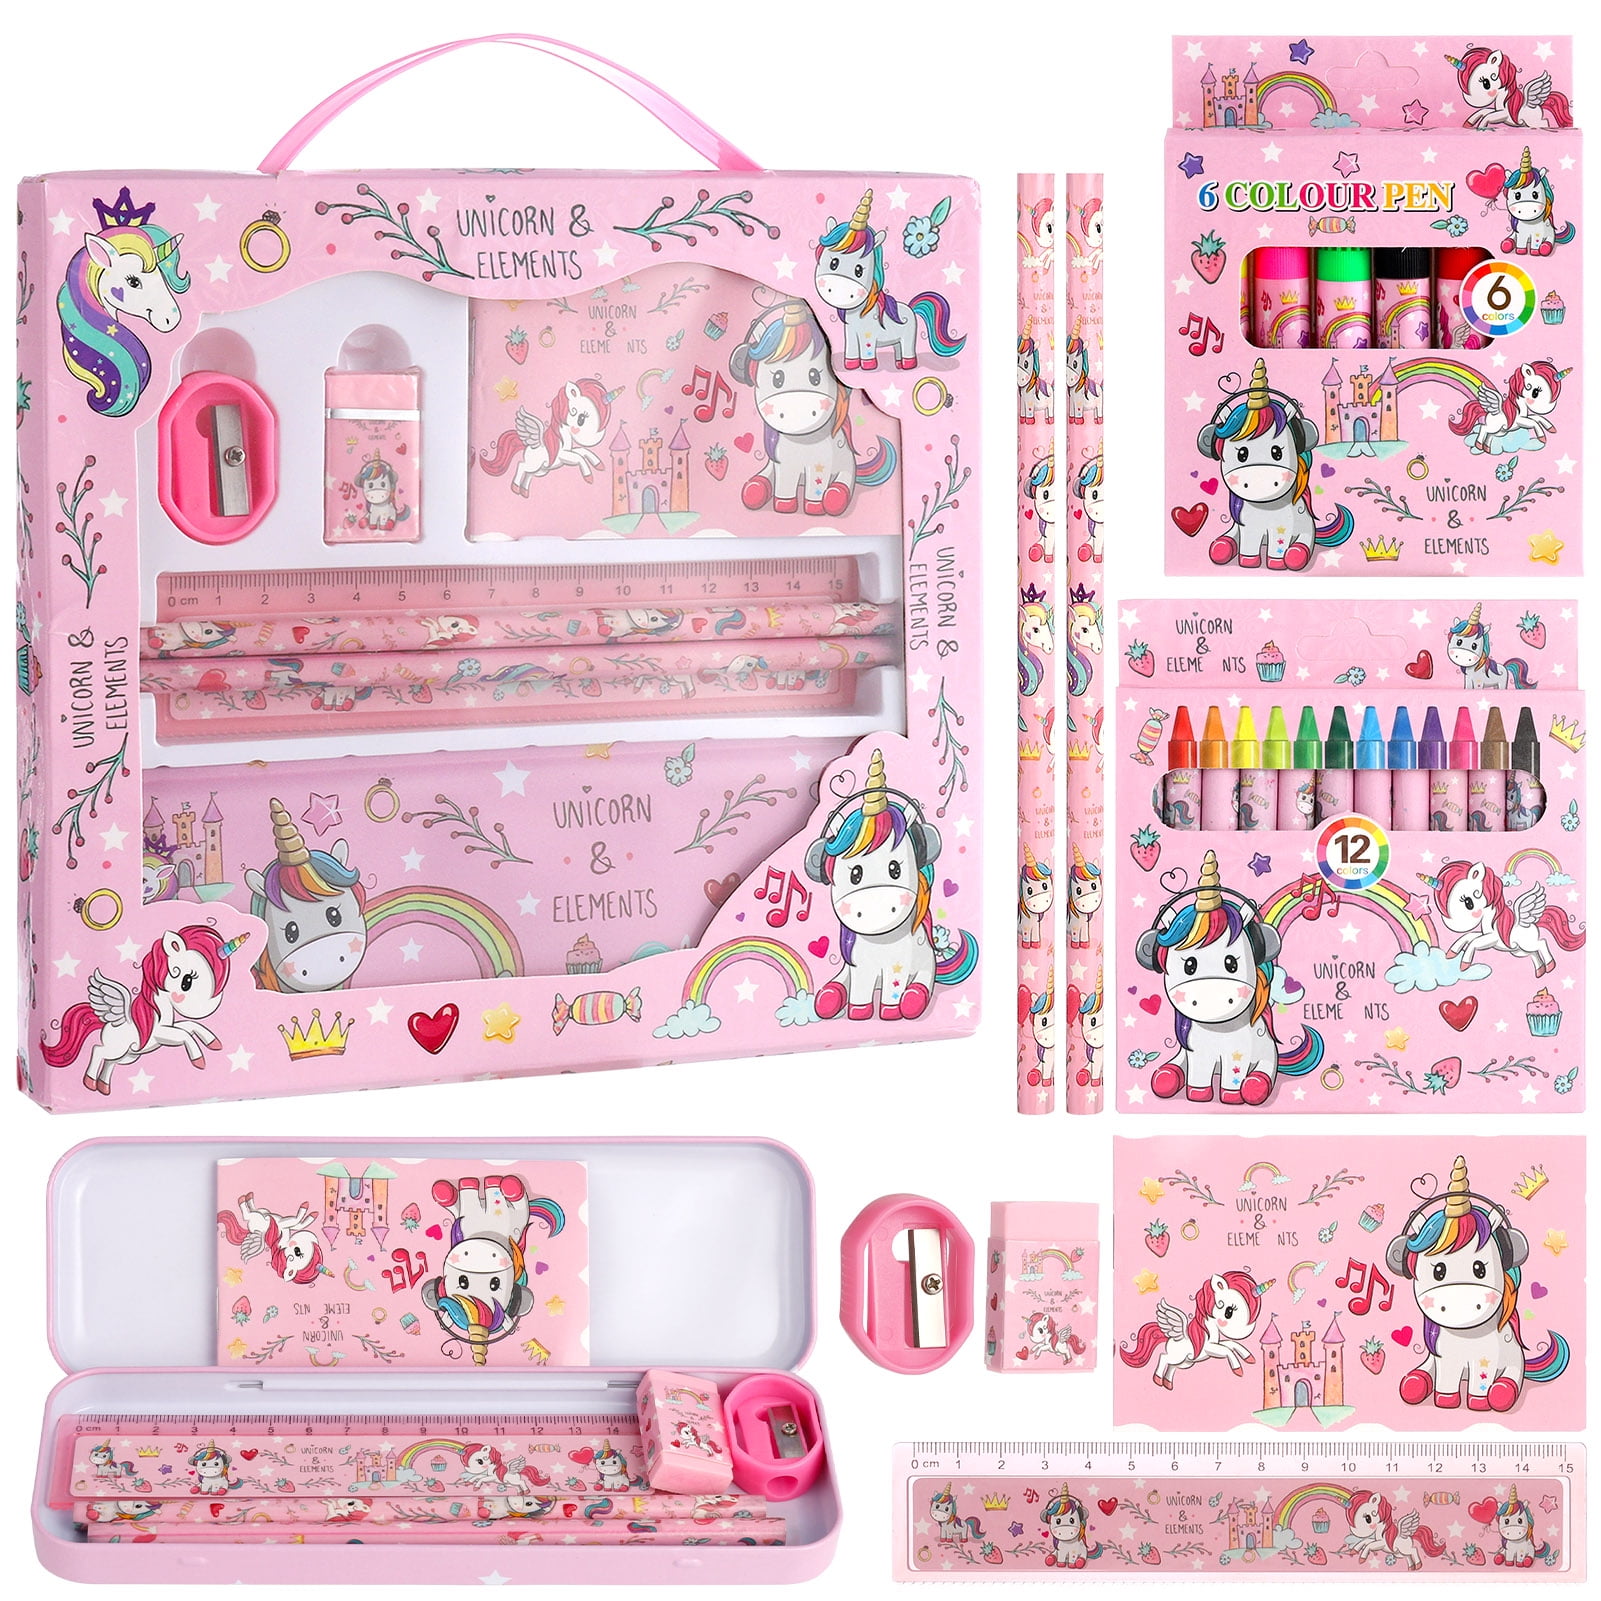 92 Piece Unicorn Stationery Set for Kids, Girls, with 60